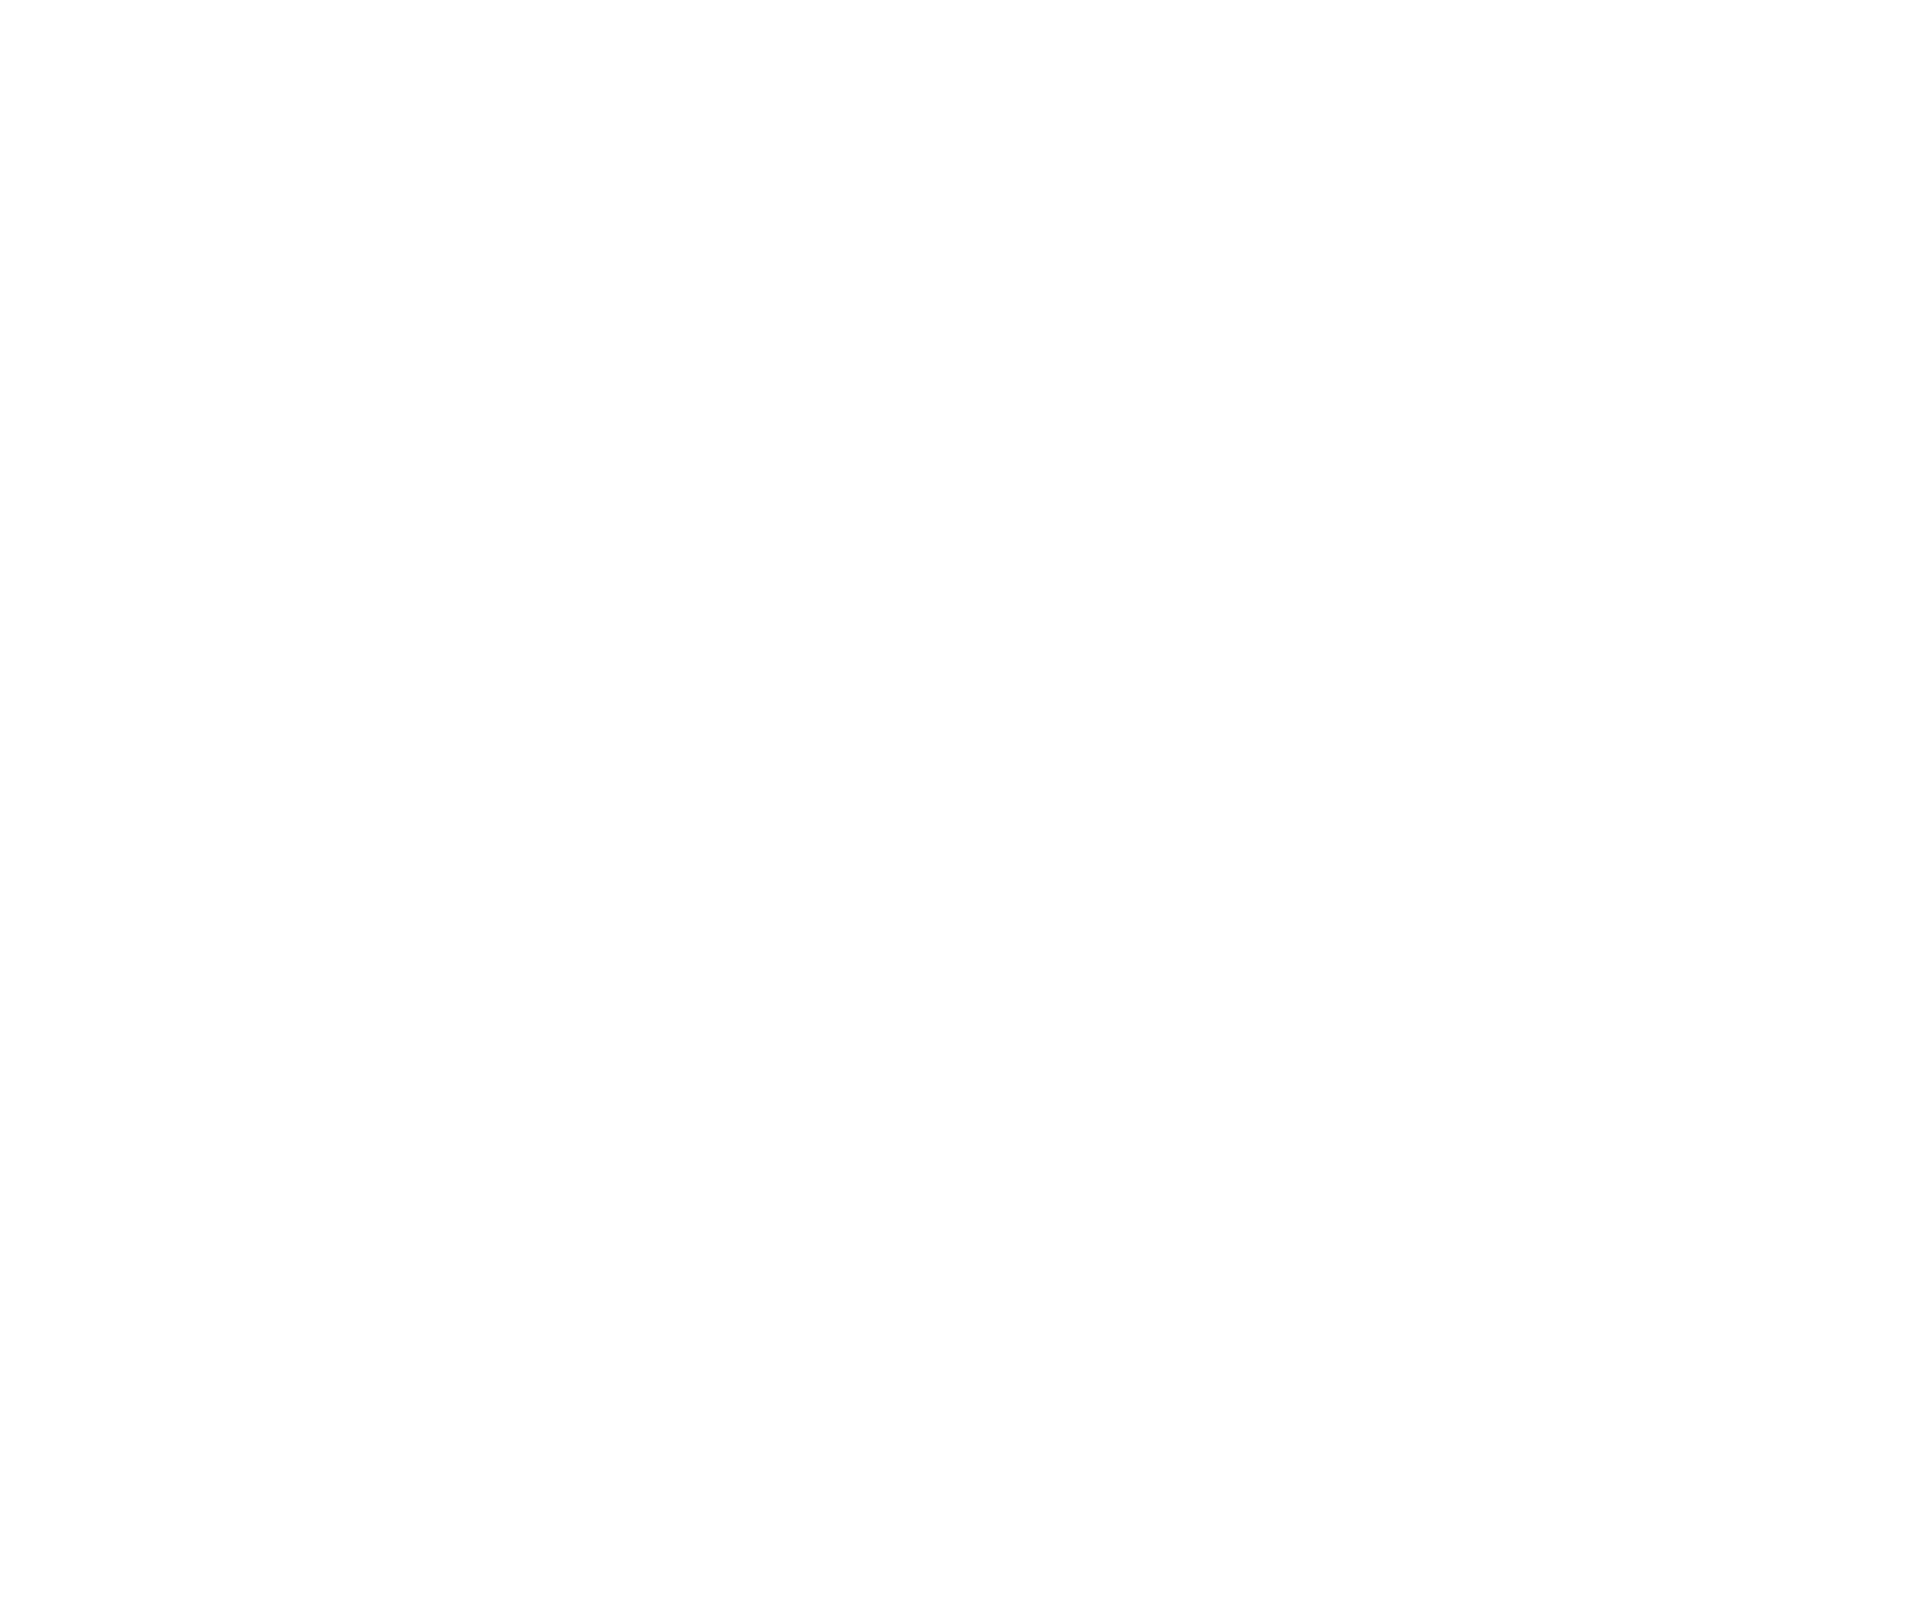 Texas Legends Gun Range and Training Center